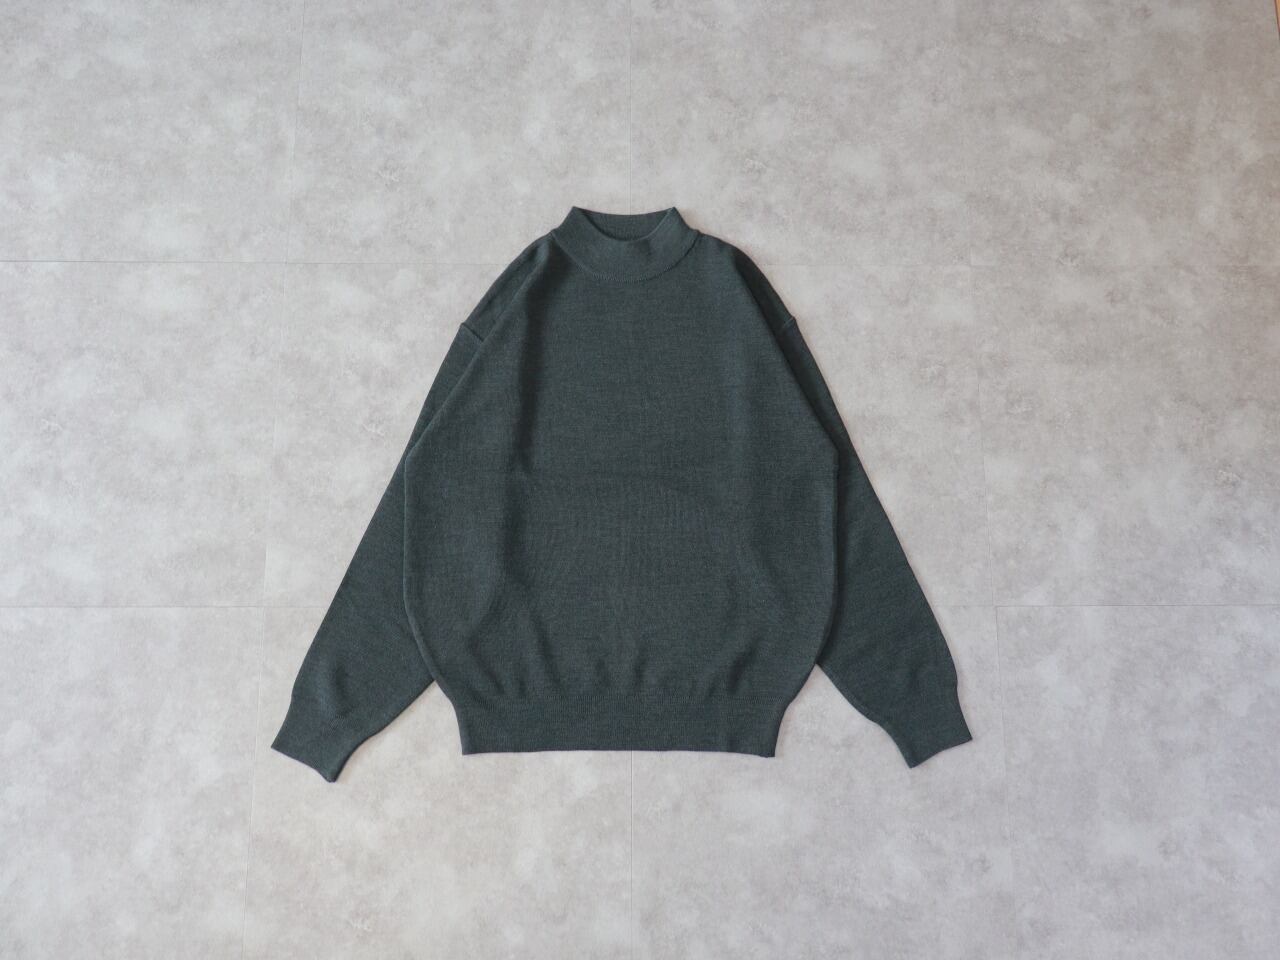 LiSS / washable mockneck knit - charcoal green